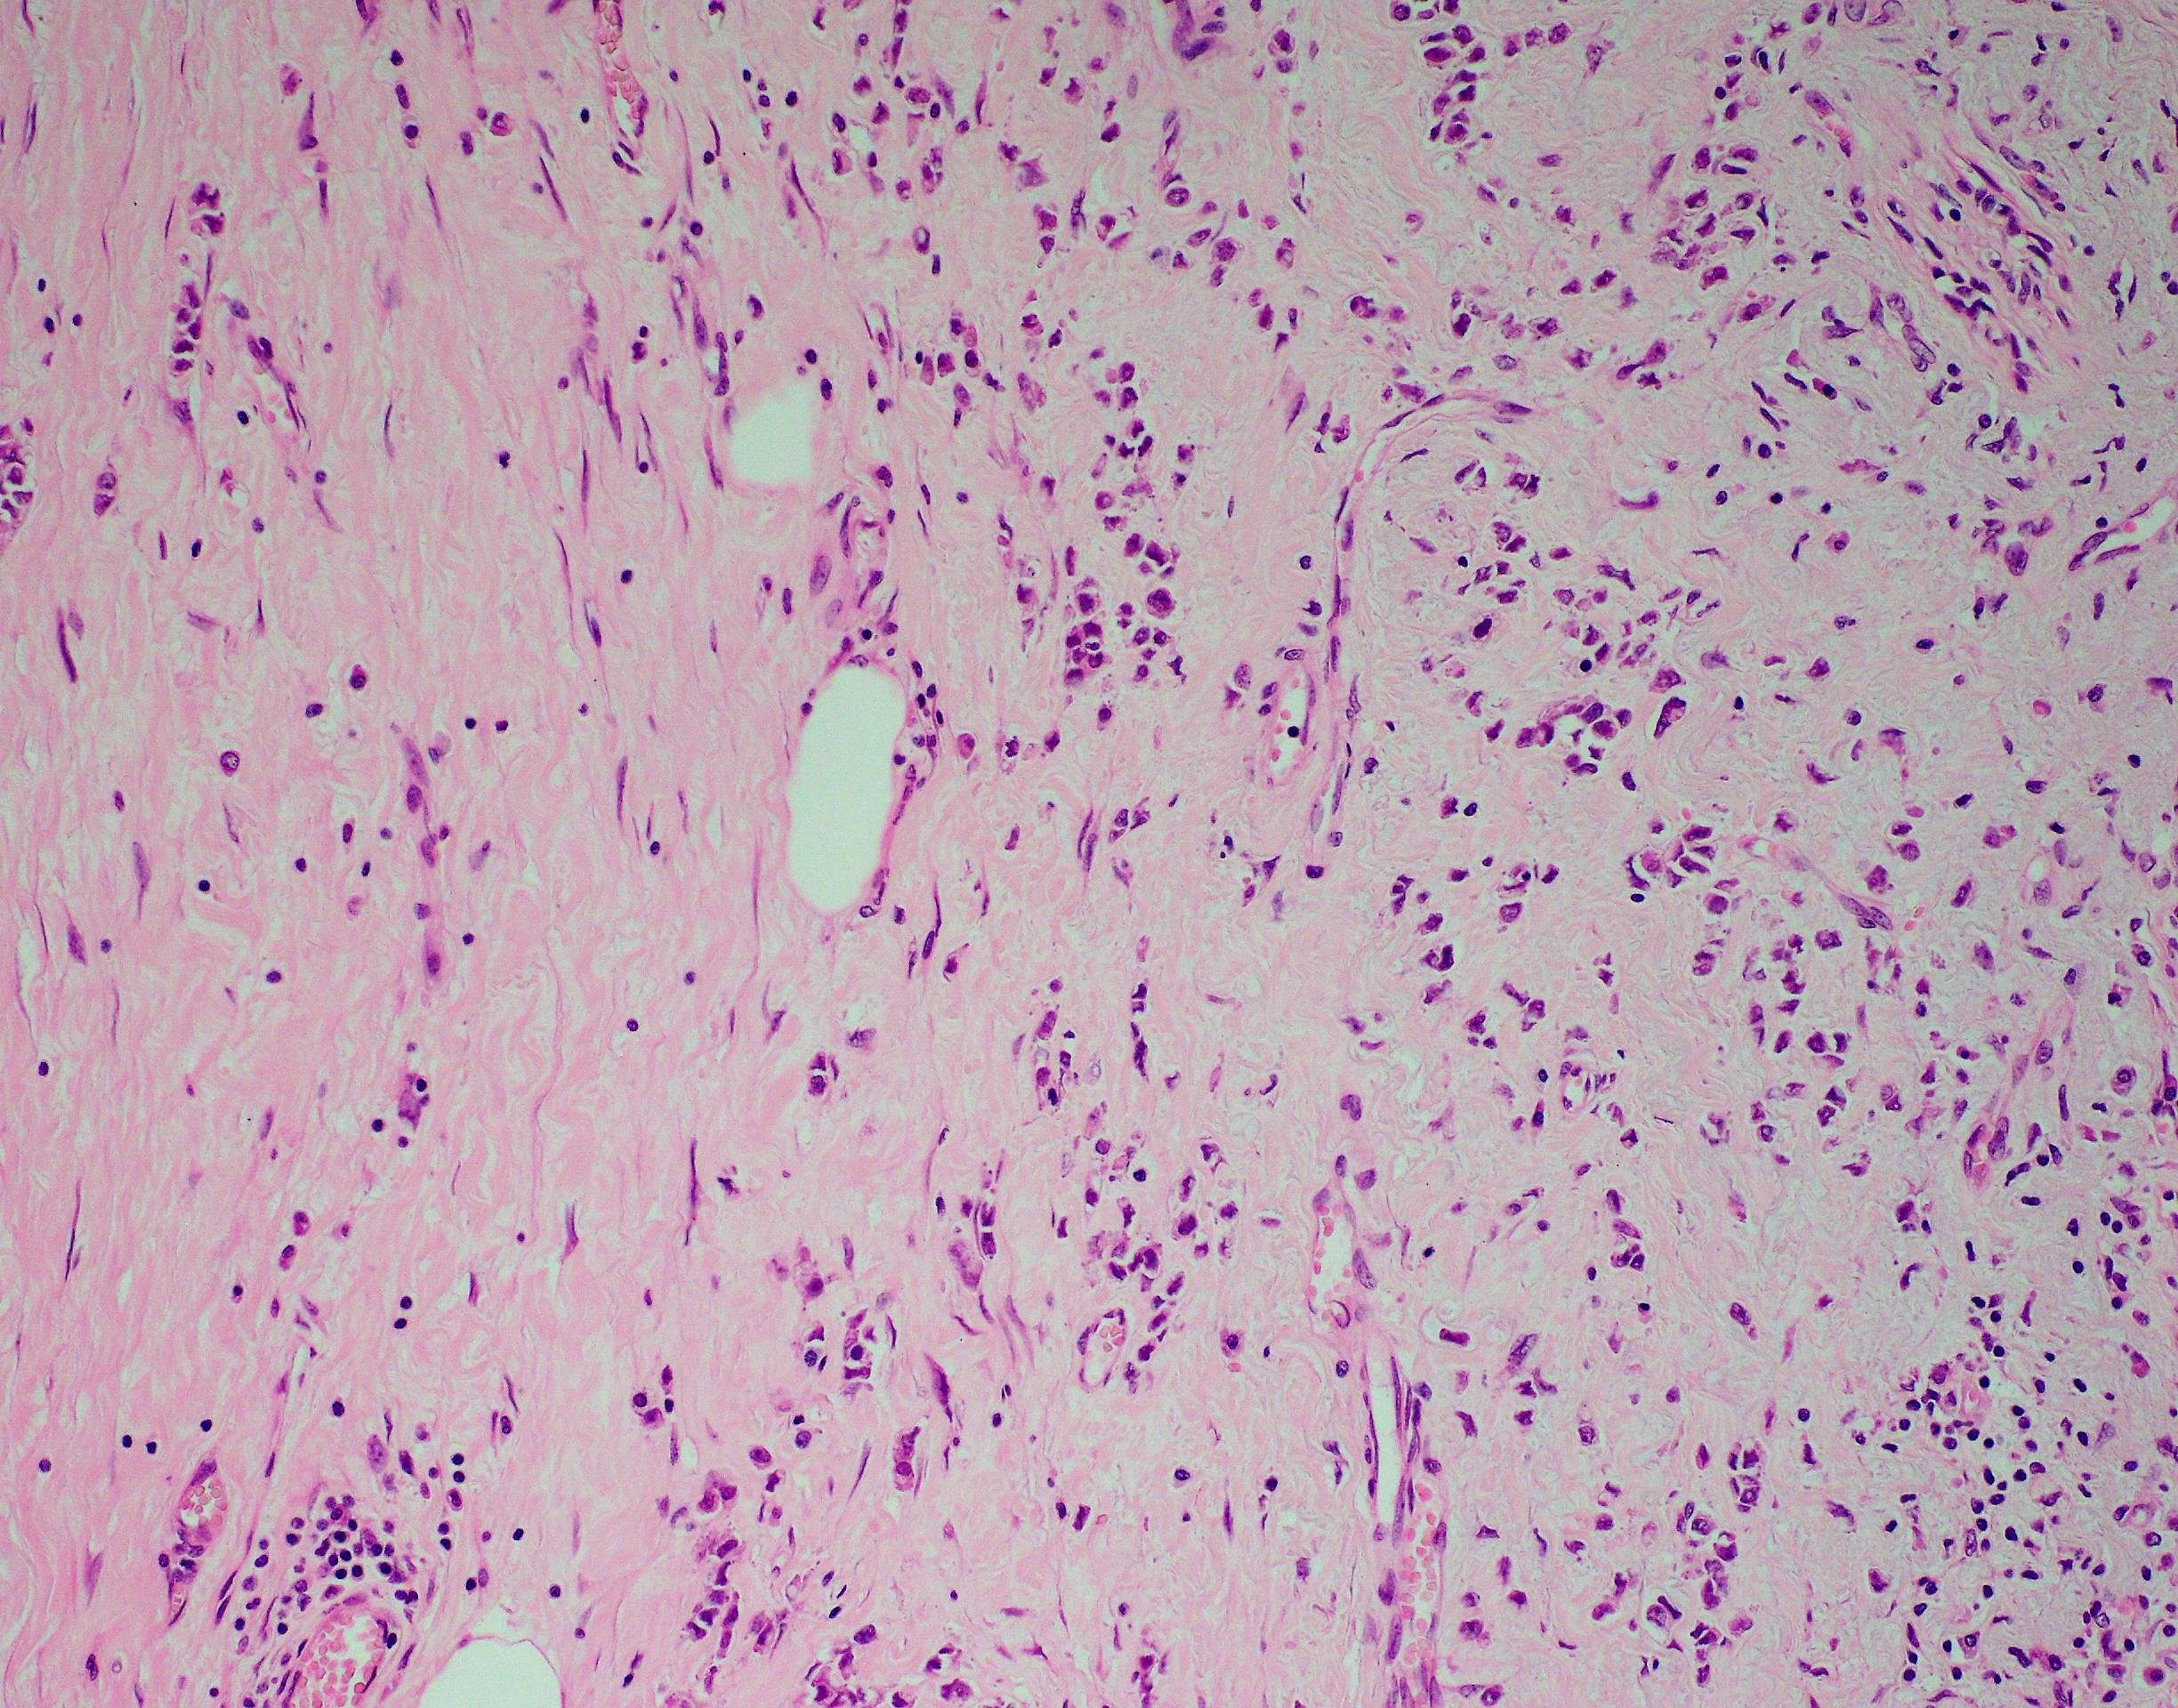 S11 2745 invasive lobular carcinoma 20x